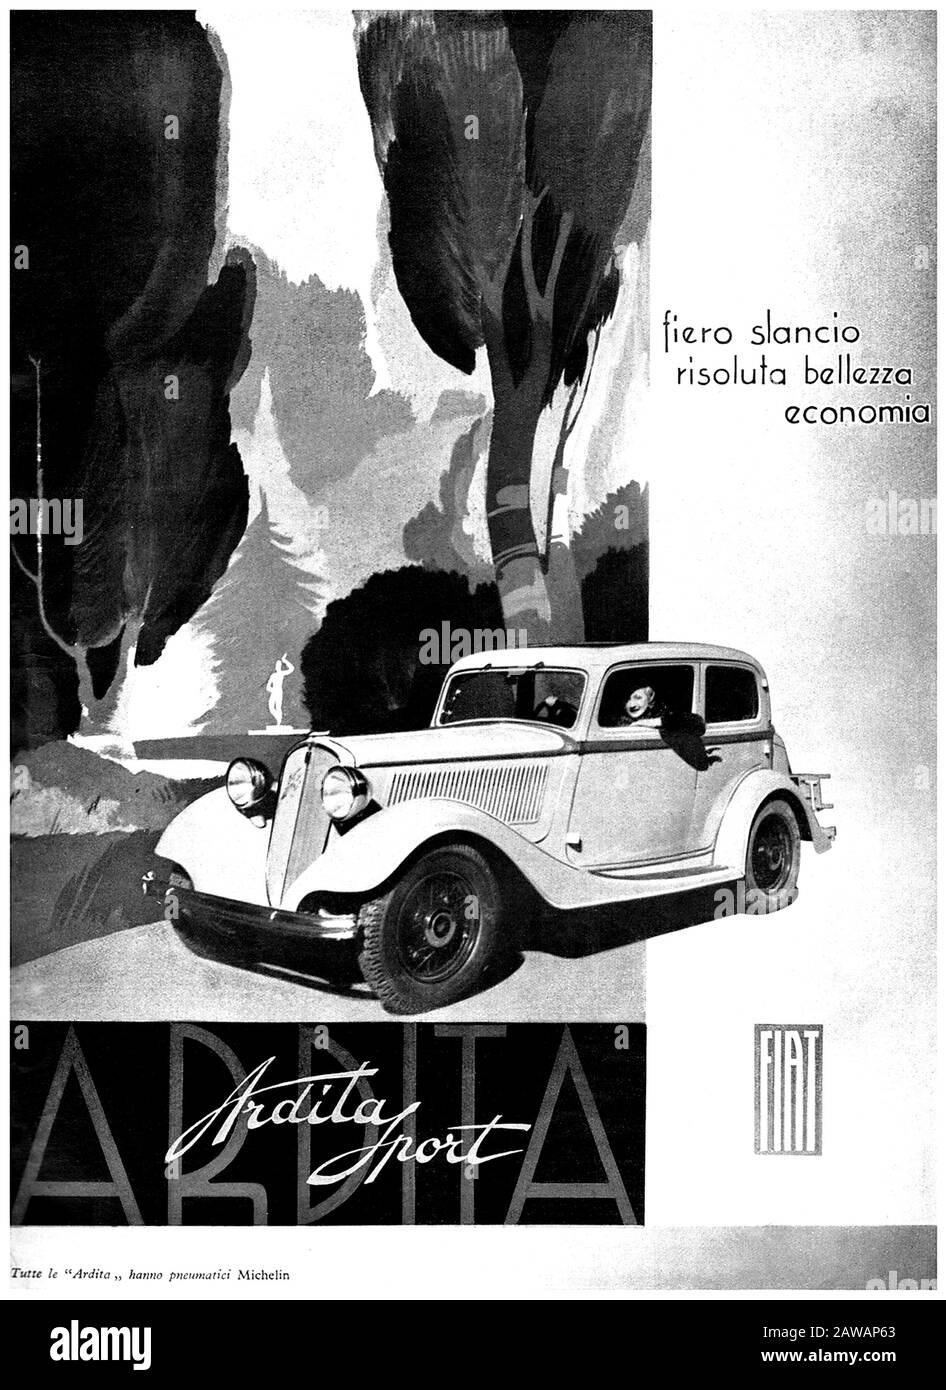 1933 , ITALY : The italian car industry FIAT ( F.I.A.T. Fabbrica Italiana  Automobili Torino ) advertising for the new model ARDITA SPORT - automobile  Stock Photo - Alamy